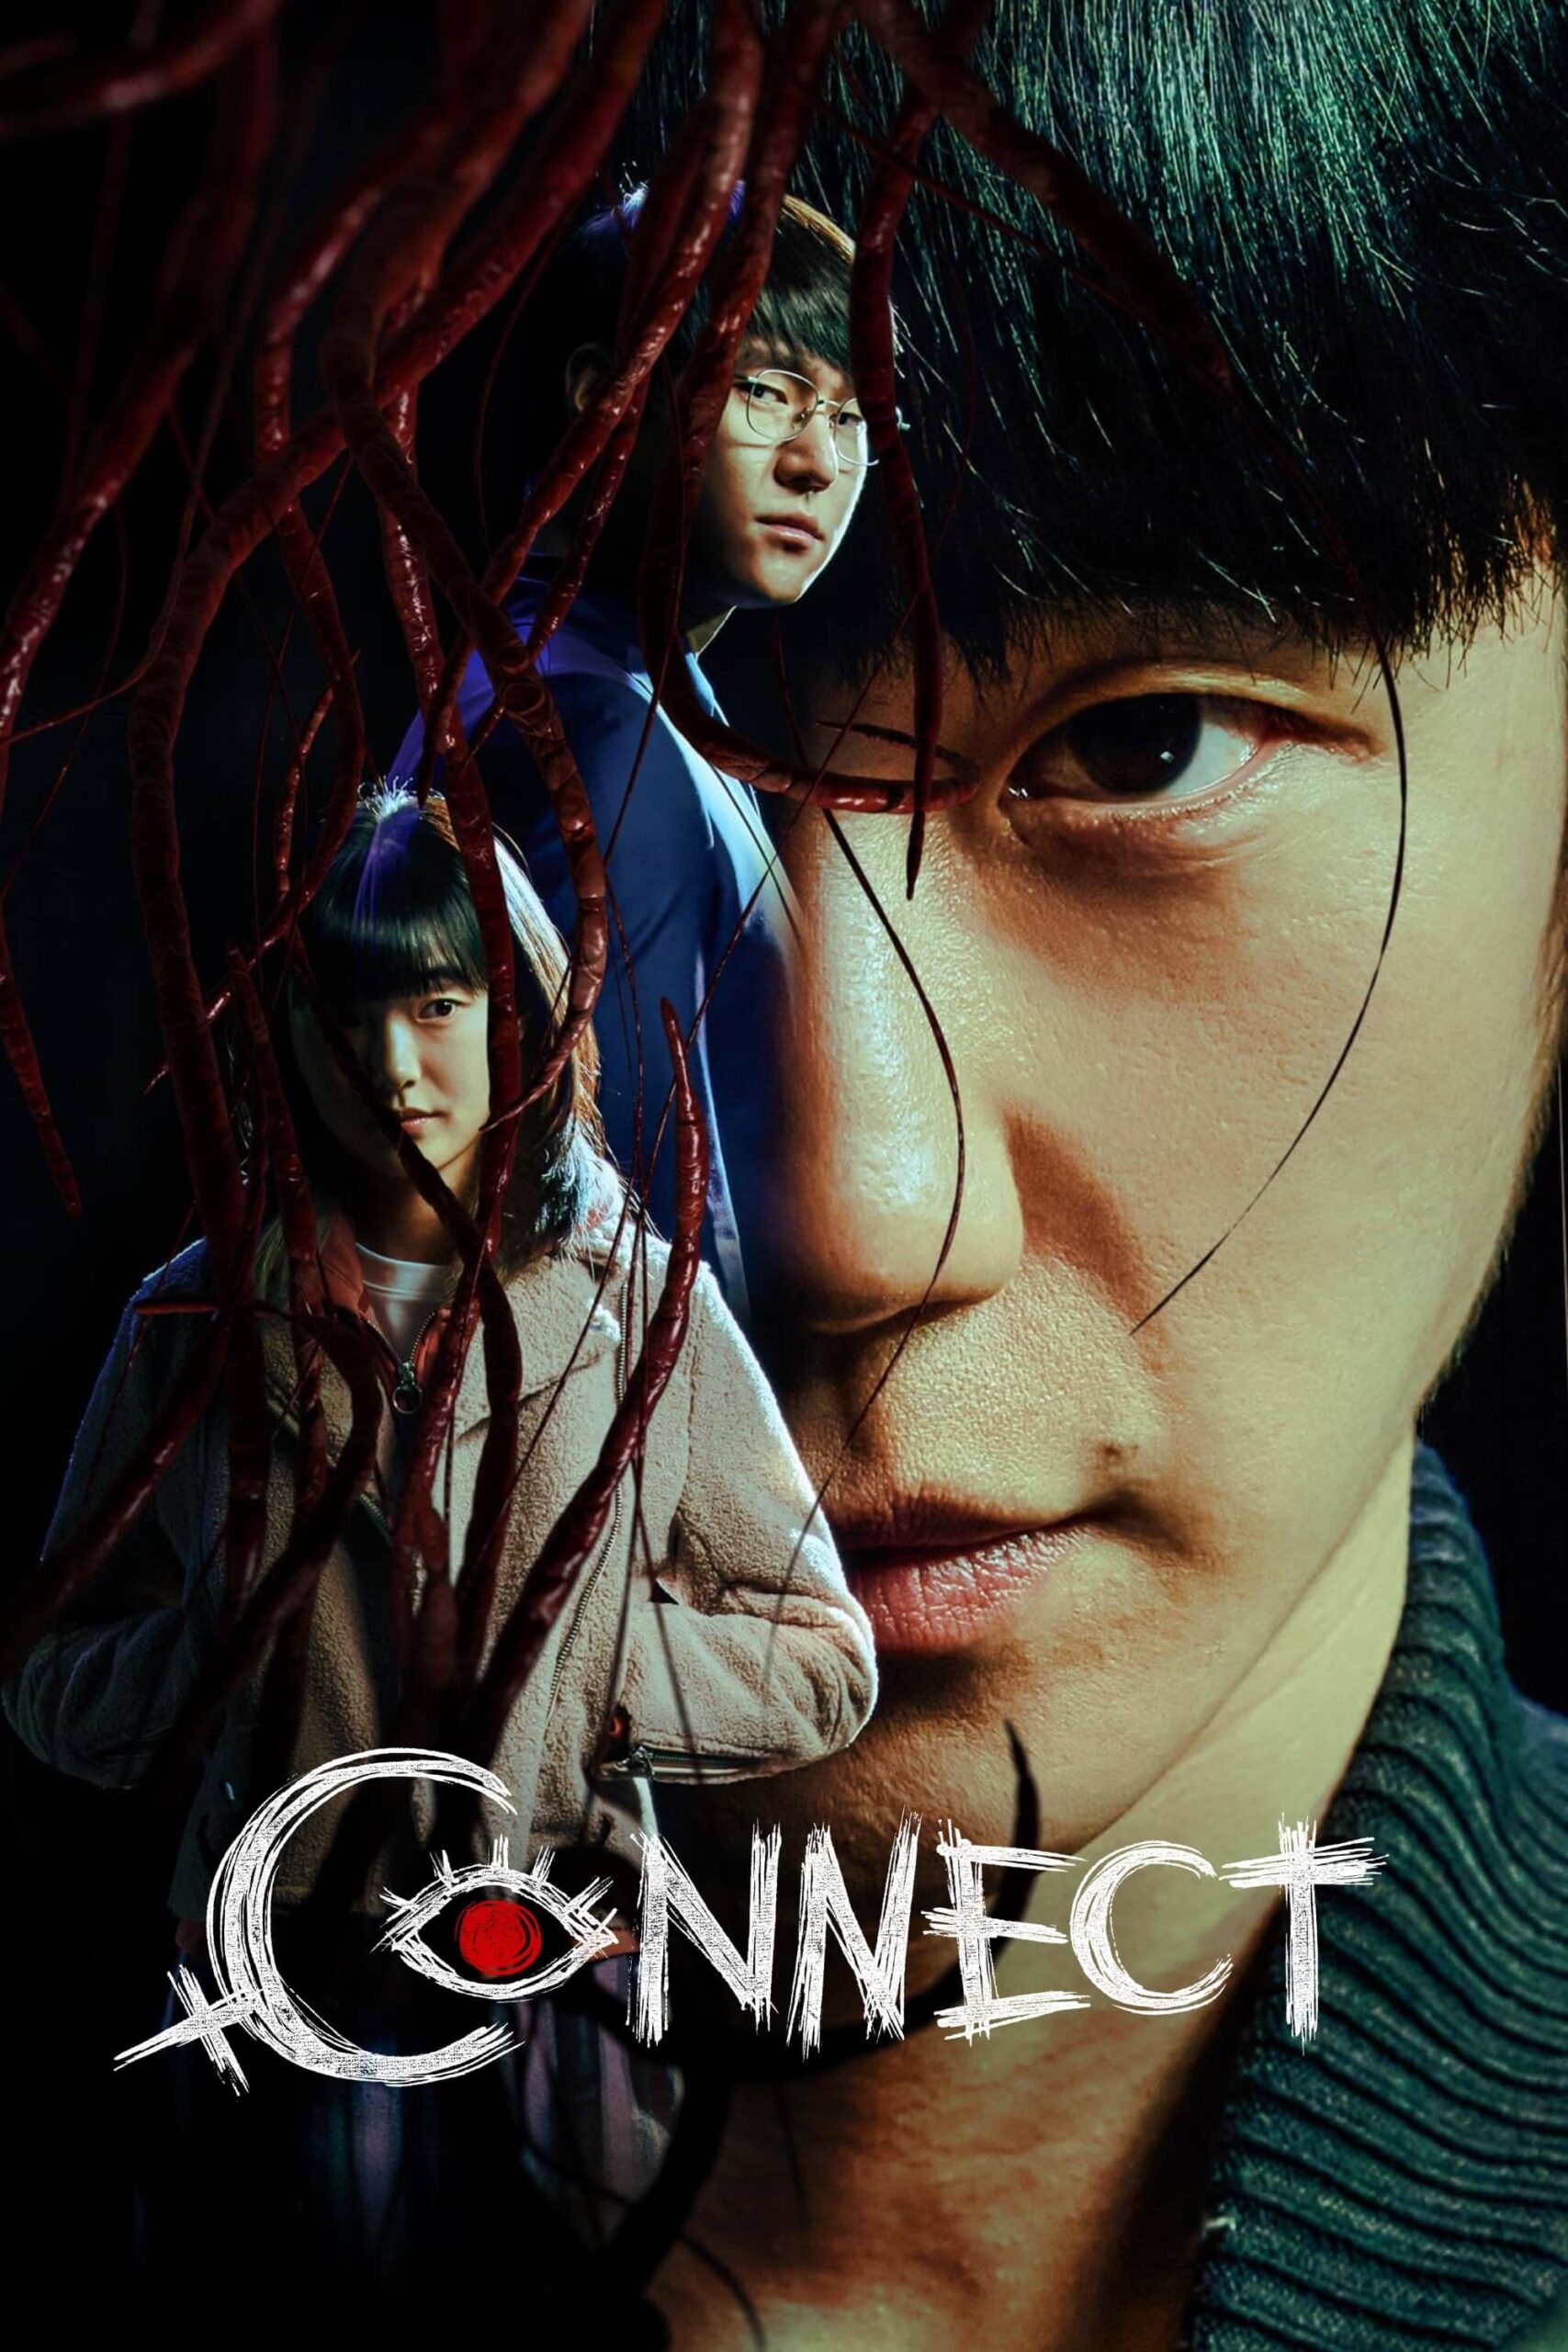 اتصال (Connect)